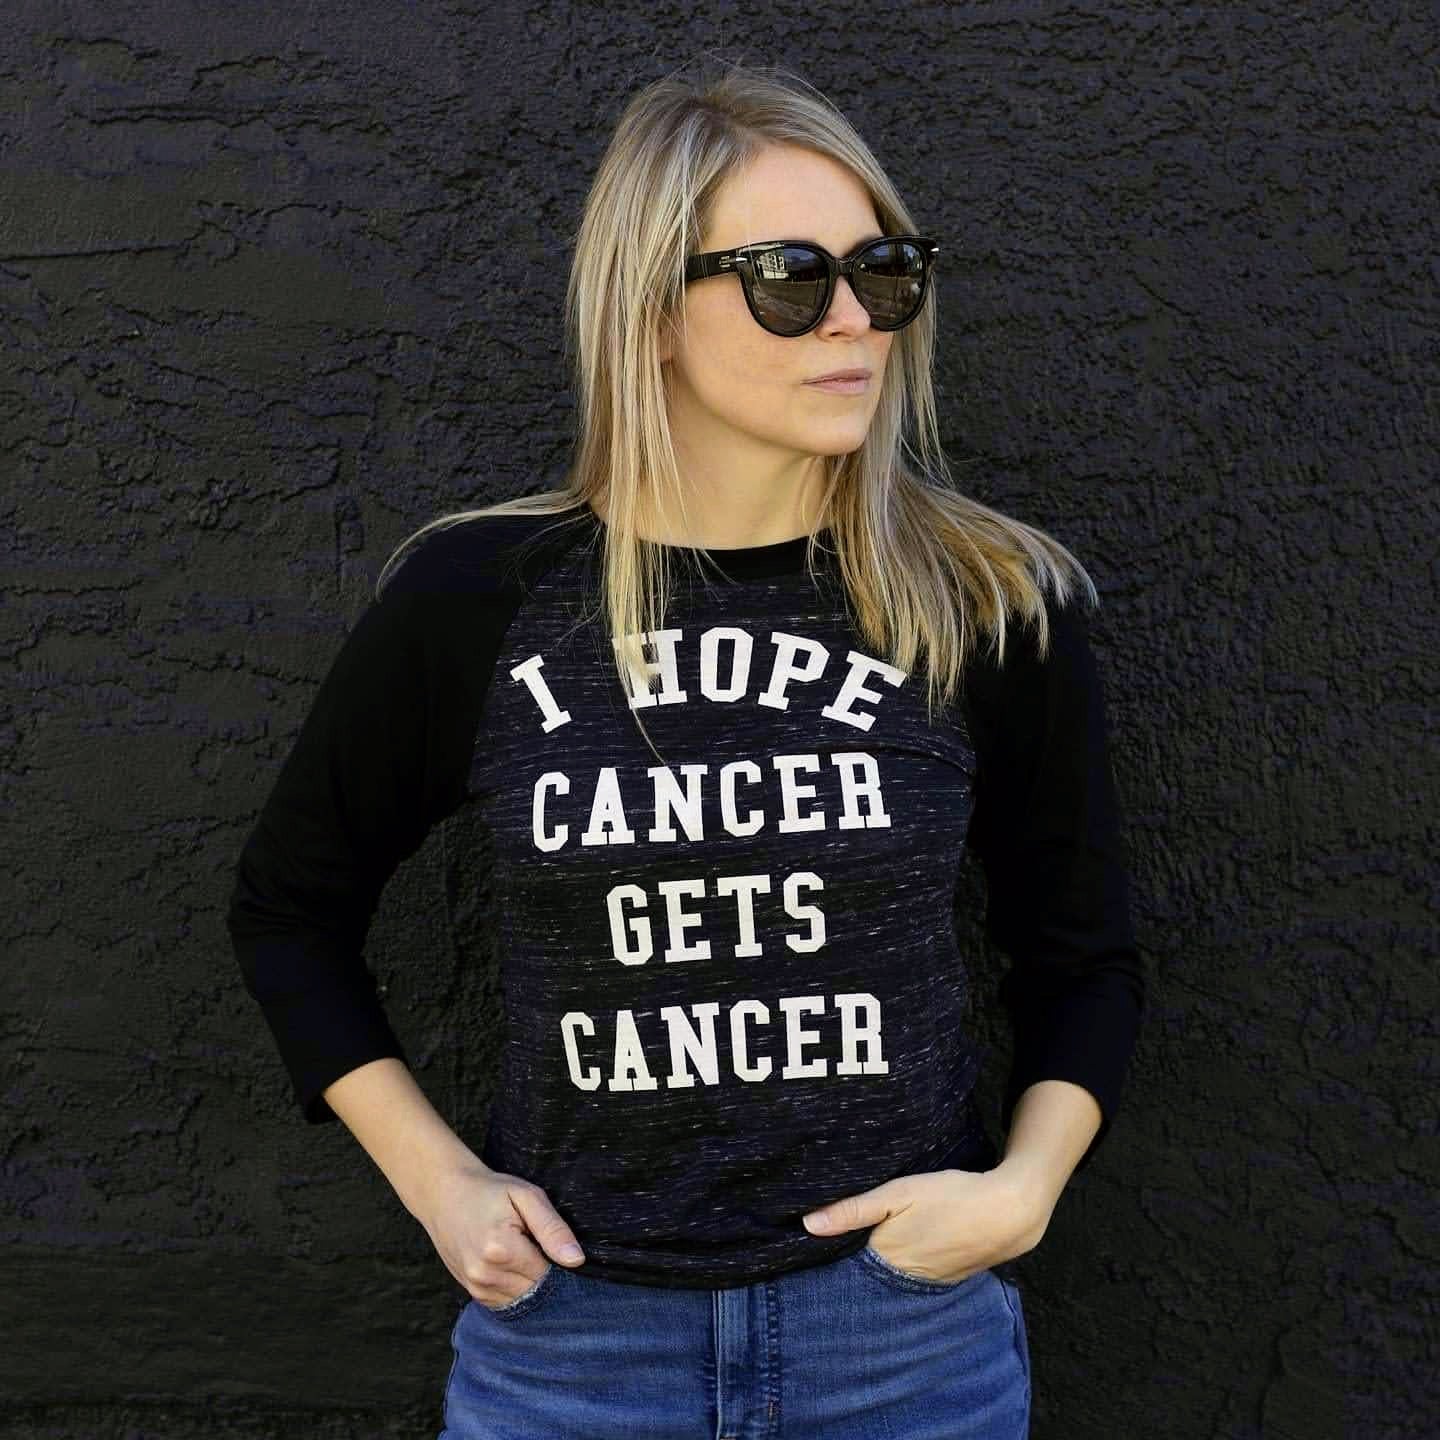 Cancer Gets Cancer Tee